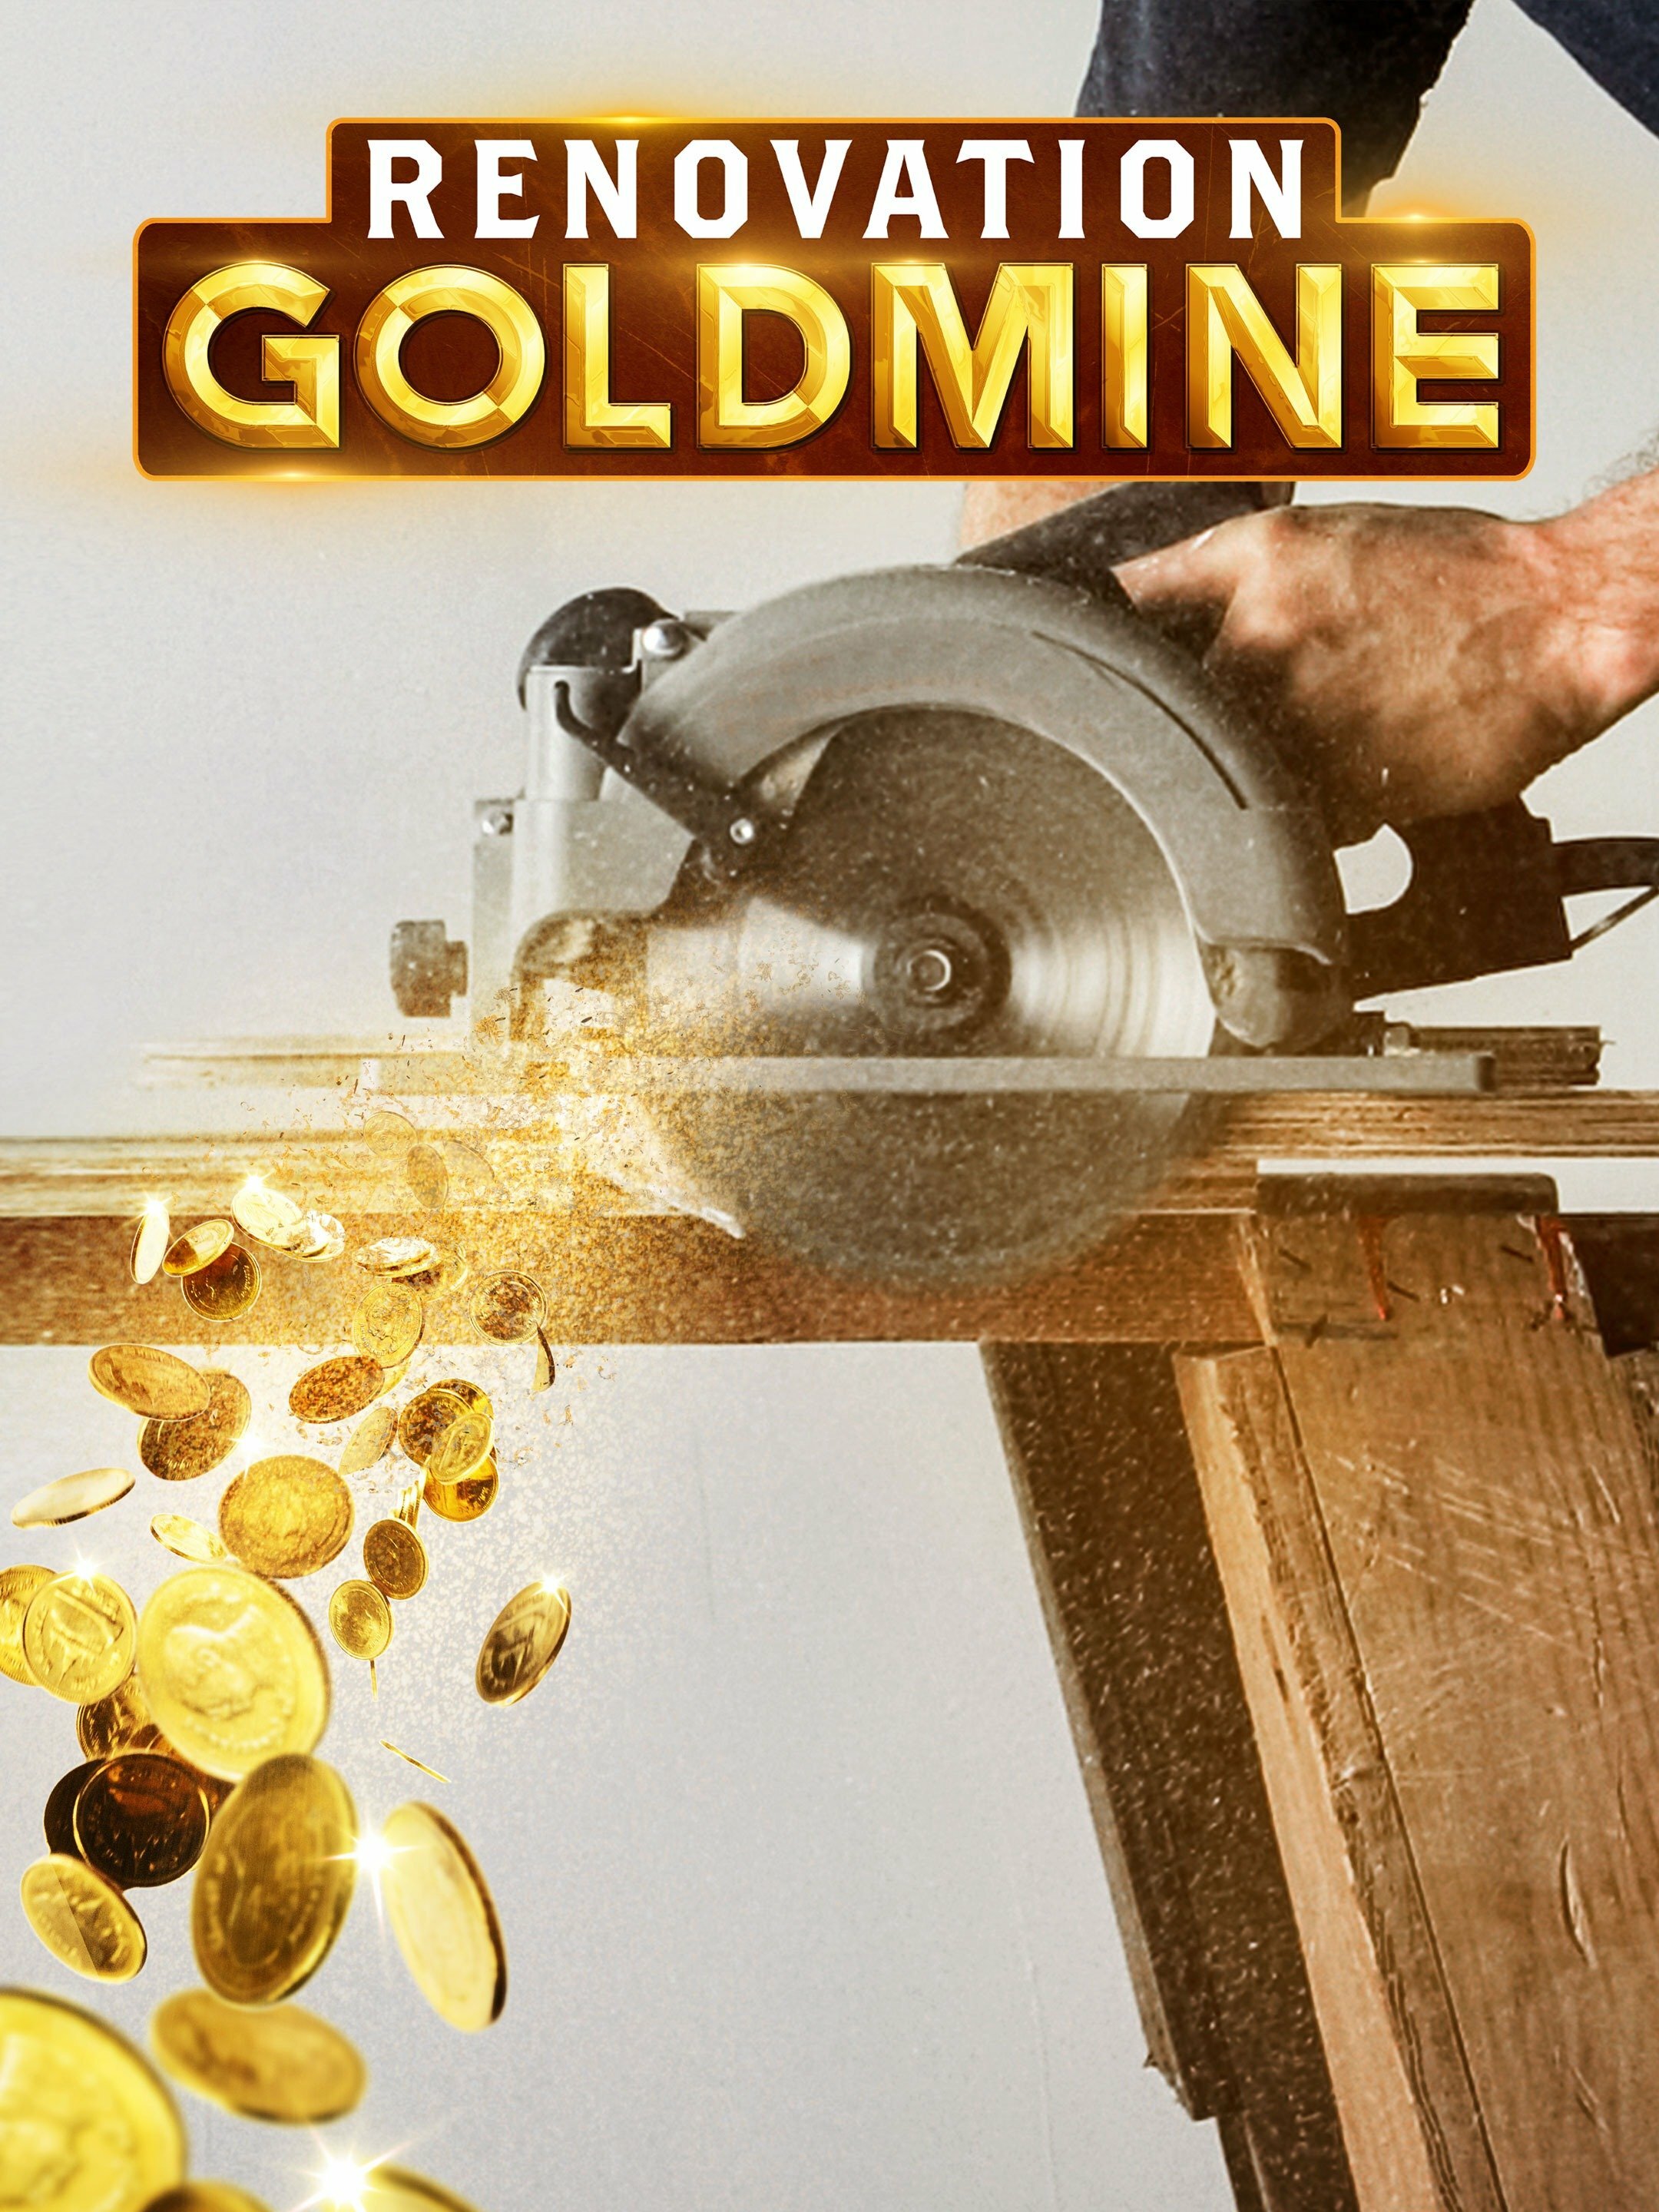 Renovation Goldmine ne zaman